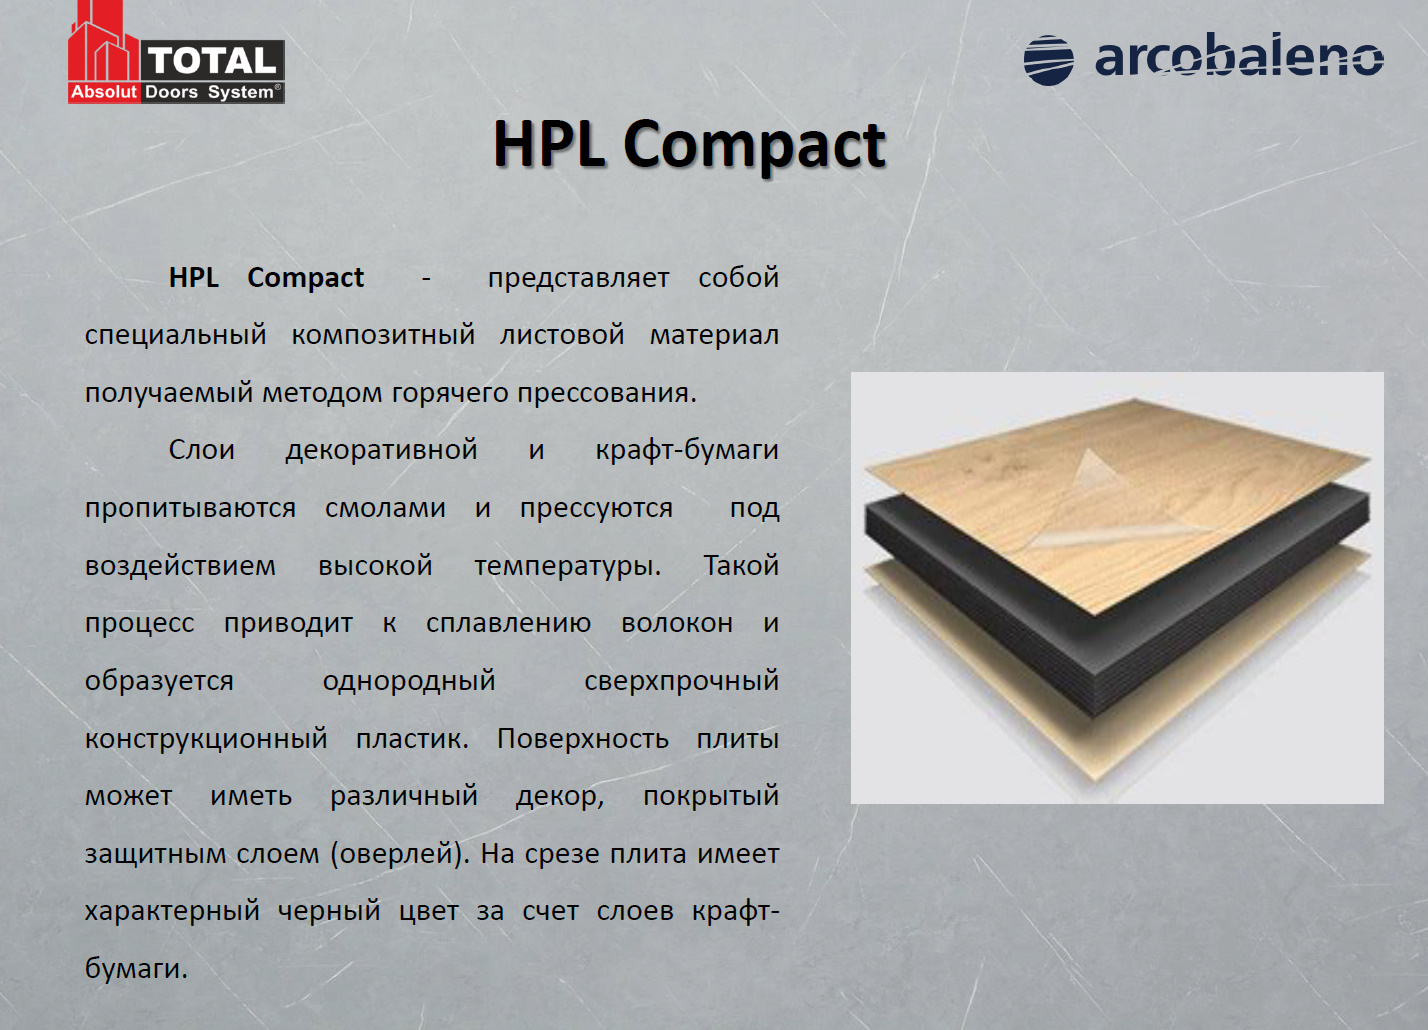 HPL Compact столешница. Компакт плита. Компакт плита столешница. Компакт плита состав. Компакт плита размеры